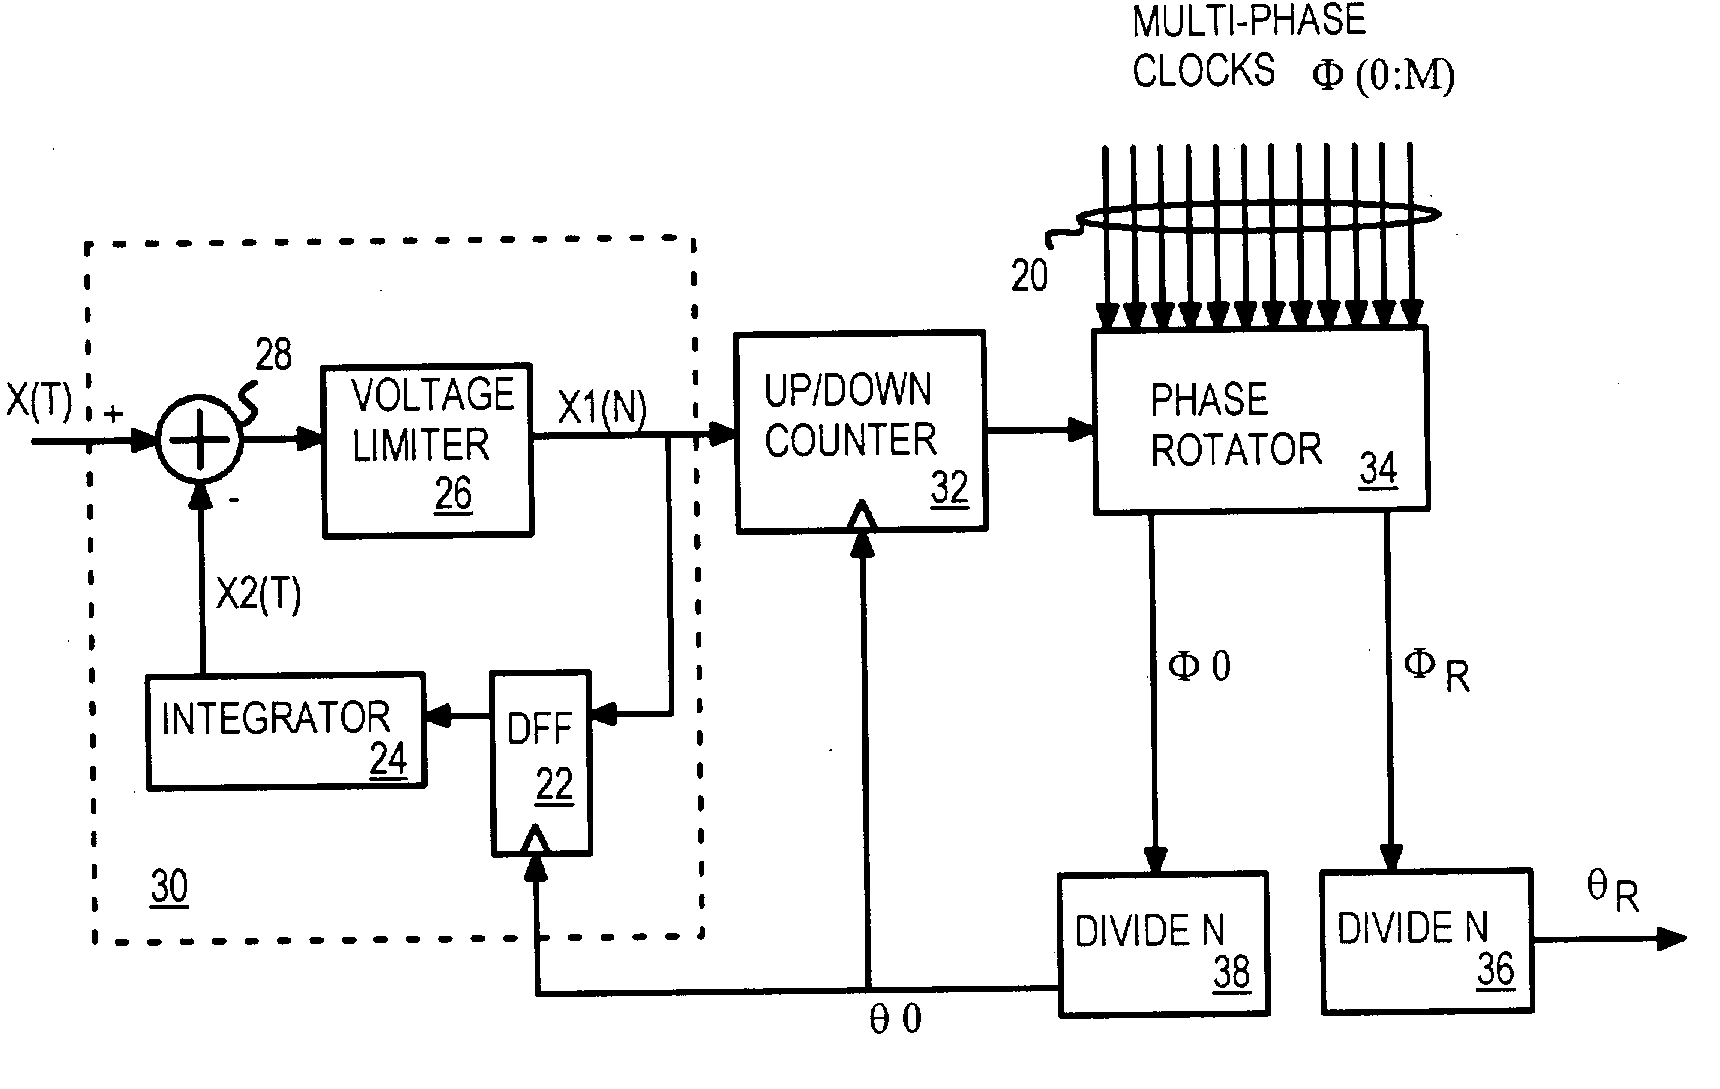 All-Digital Phase Modulator/Demodulator Using Multi-Phase Clocks and Digital PLL